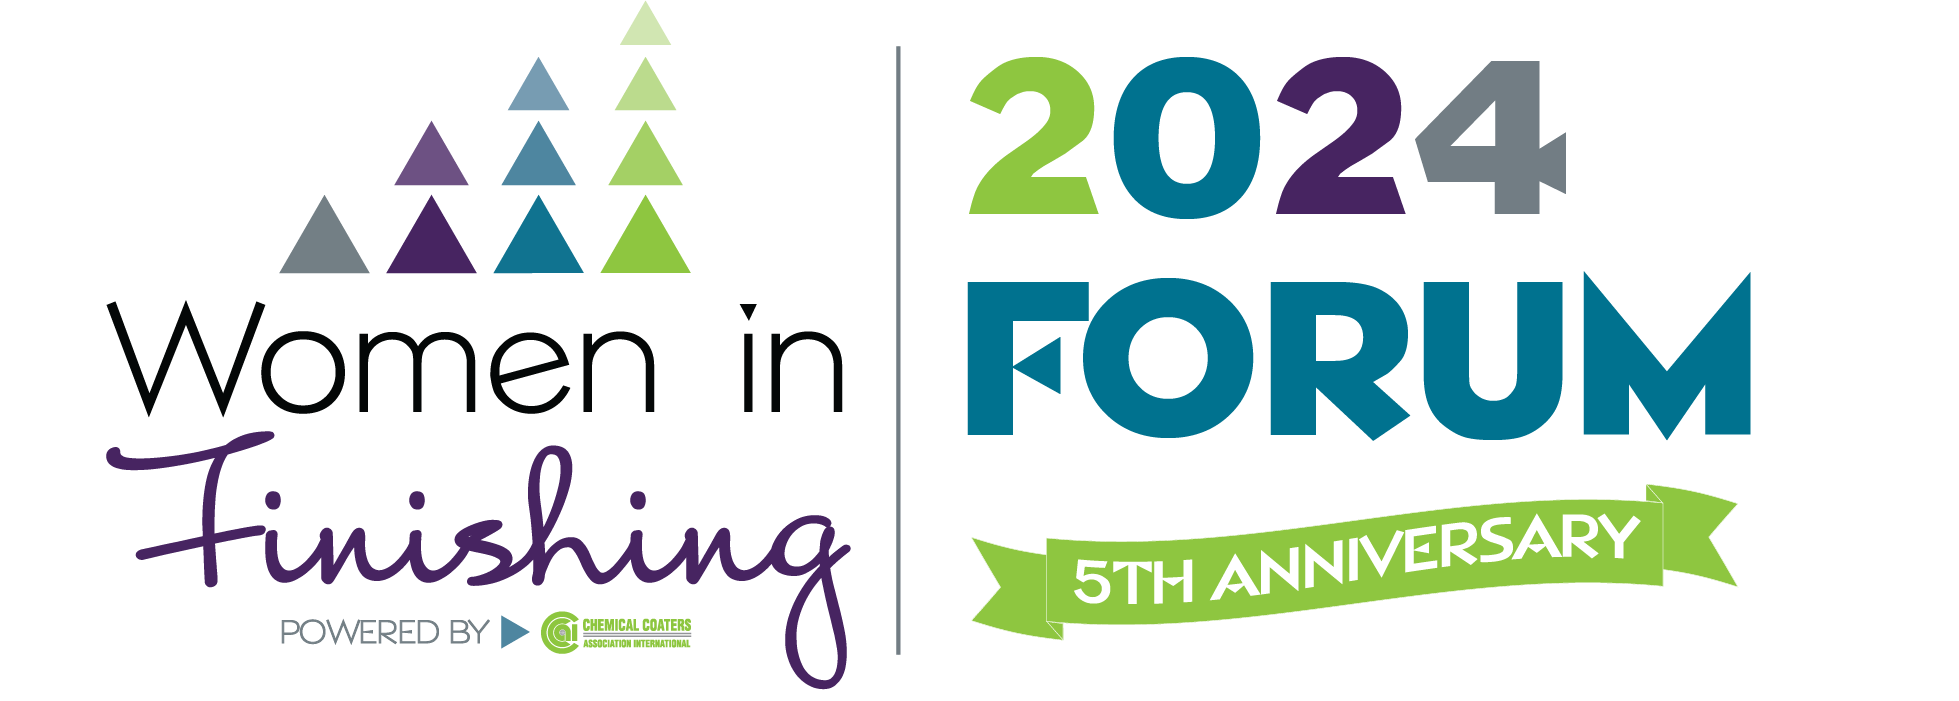 2024 Women in Finishing FORUM Logo